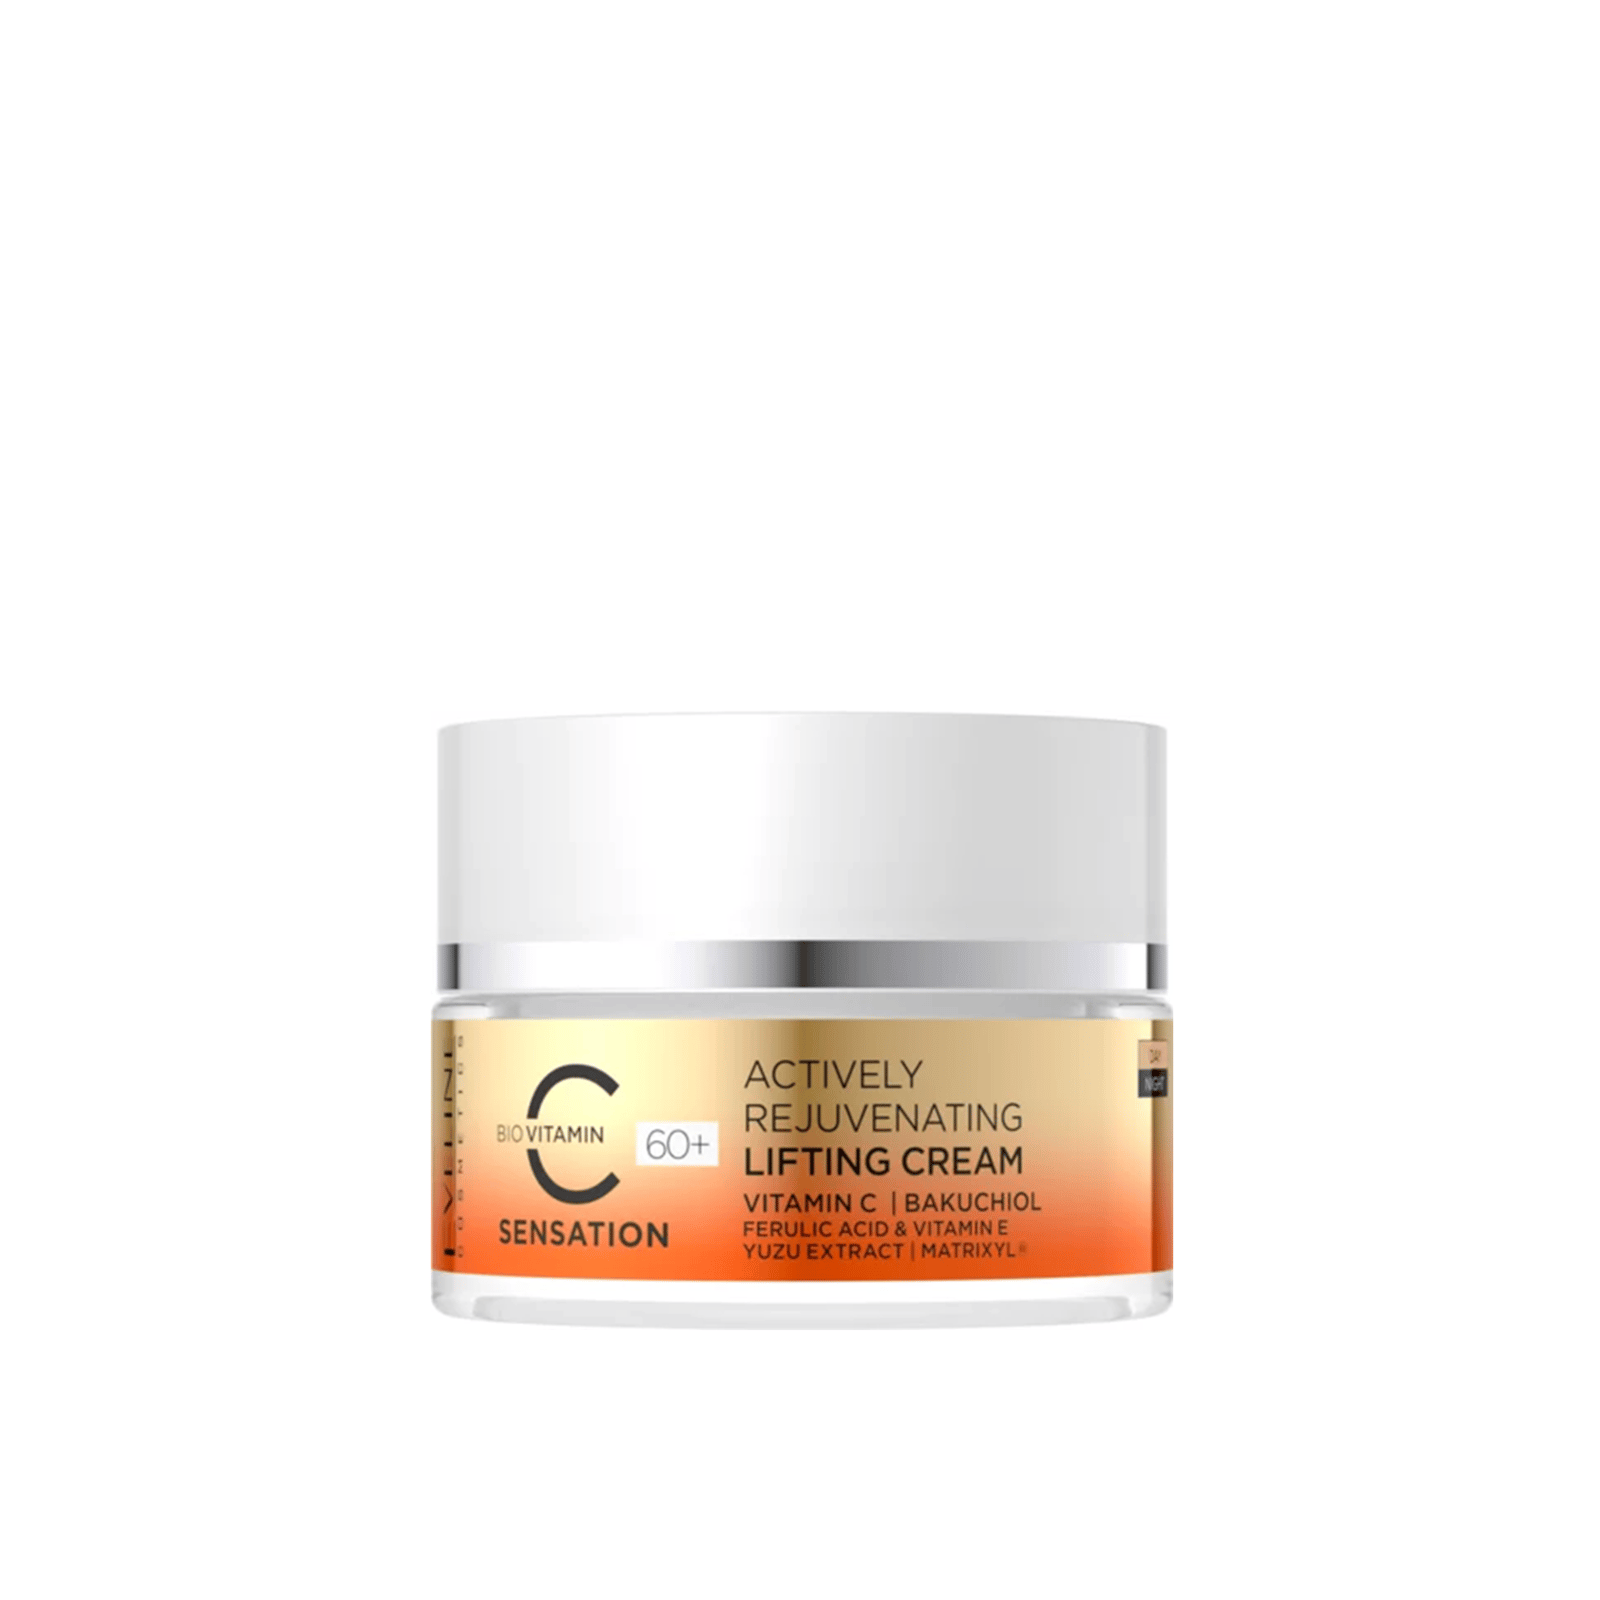 Eveline Cosmetics Bio Vitamin C Sensation 60+ Actively Rejuvenating Cream 50ml